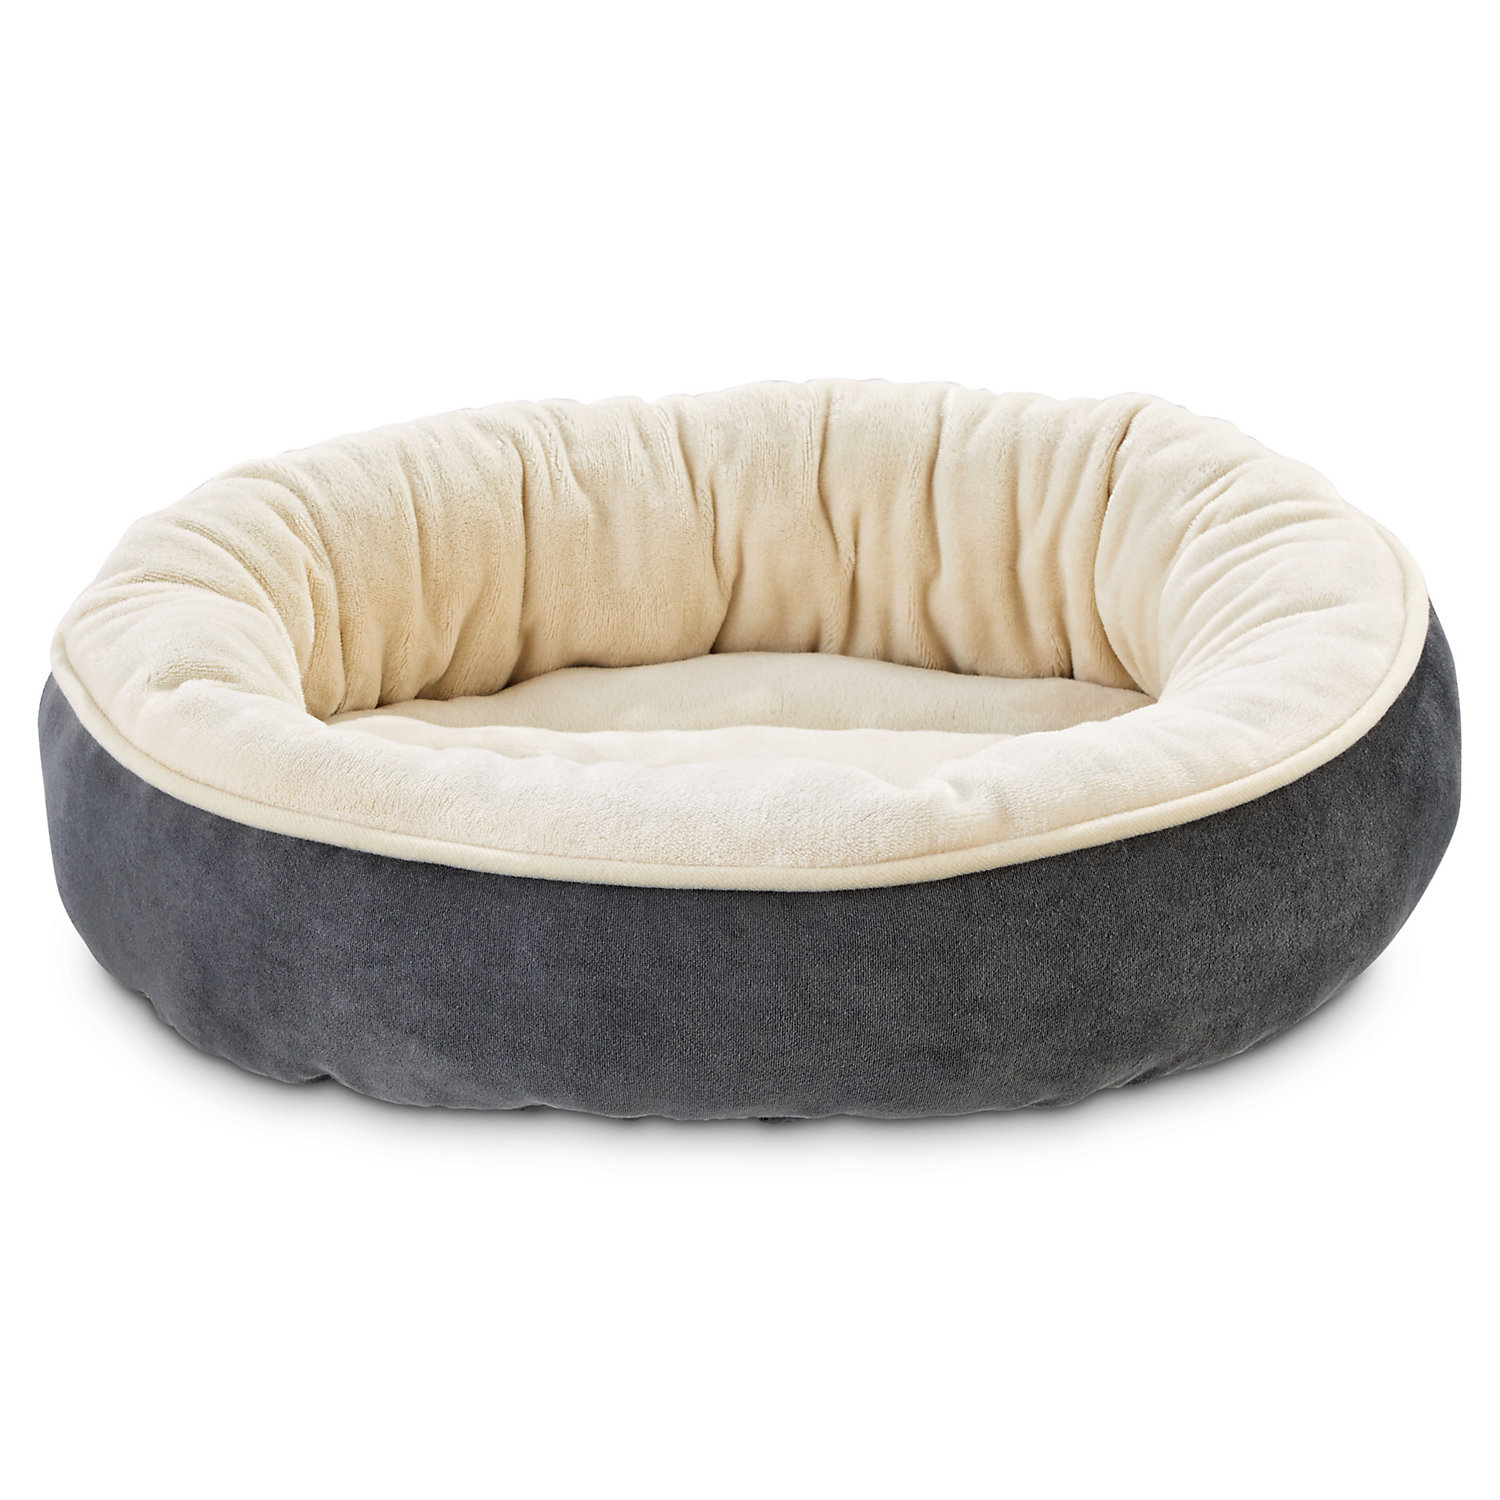 Animaze Gray Circle Bolster Dog Bed